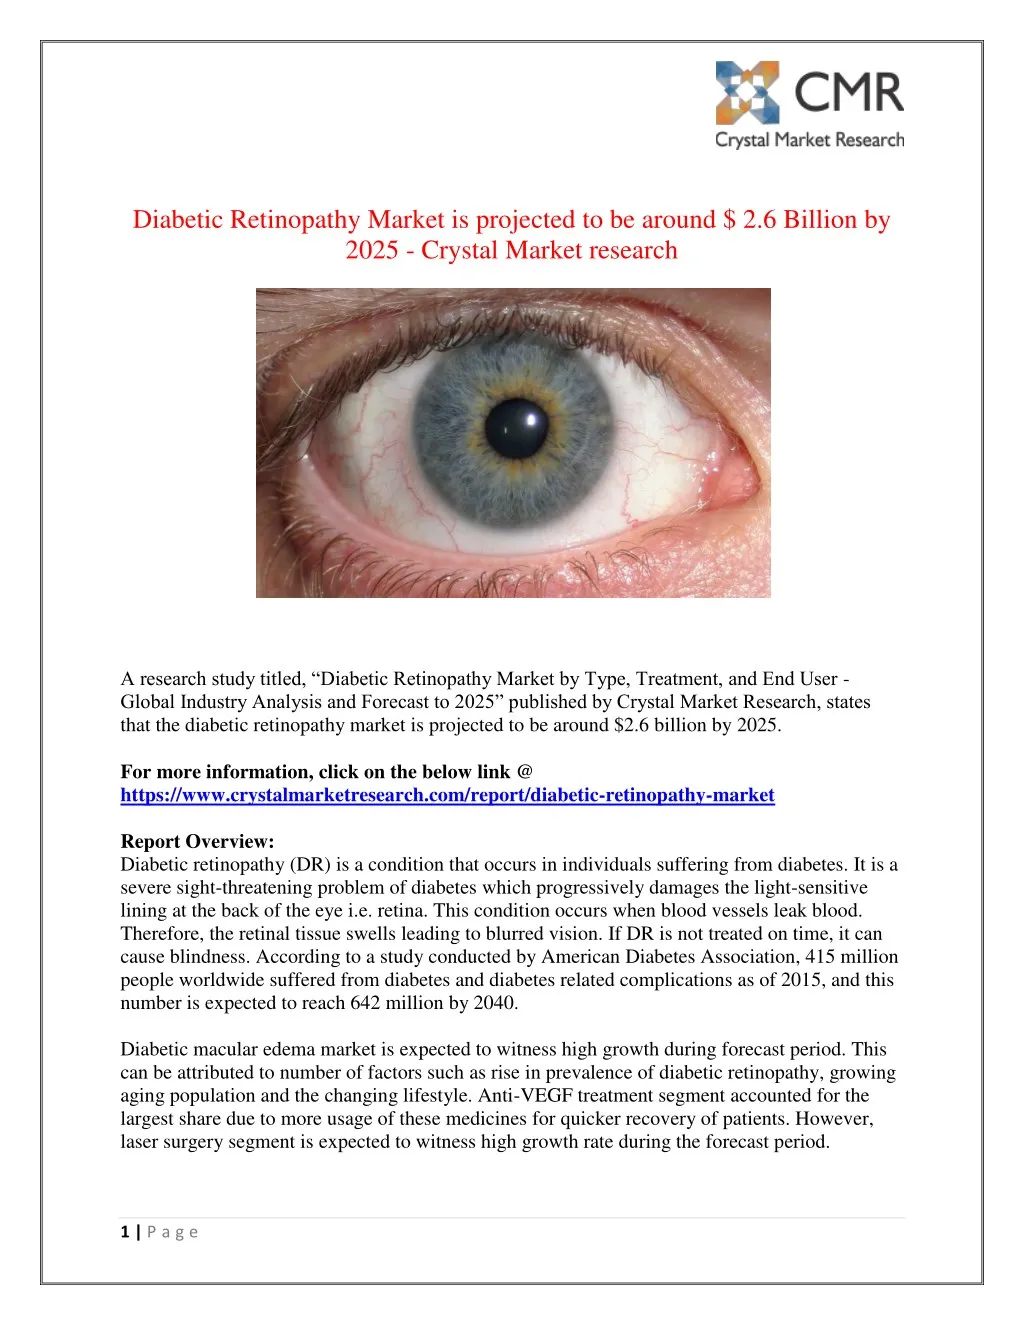 diabetic retinopathy market is projected